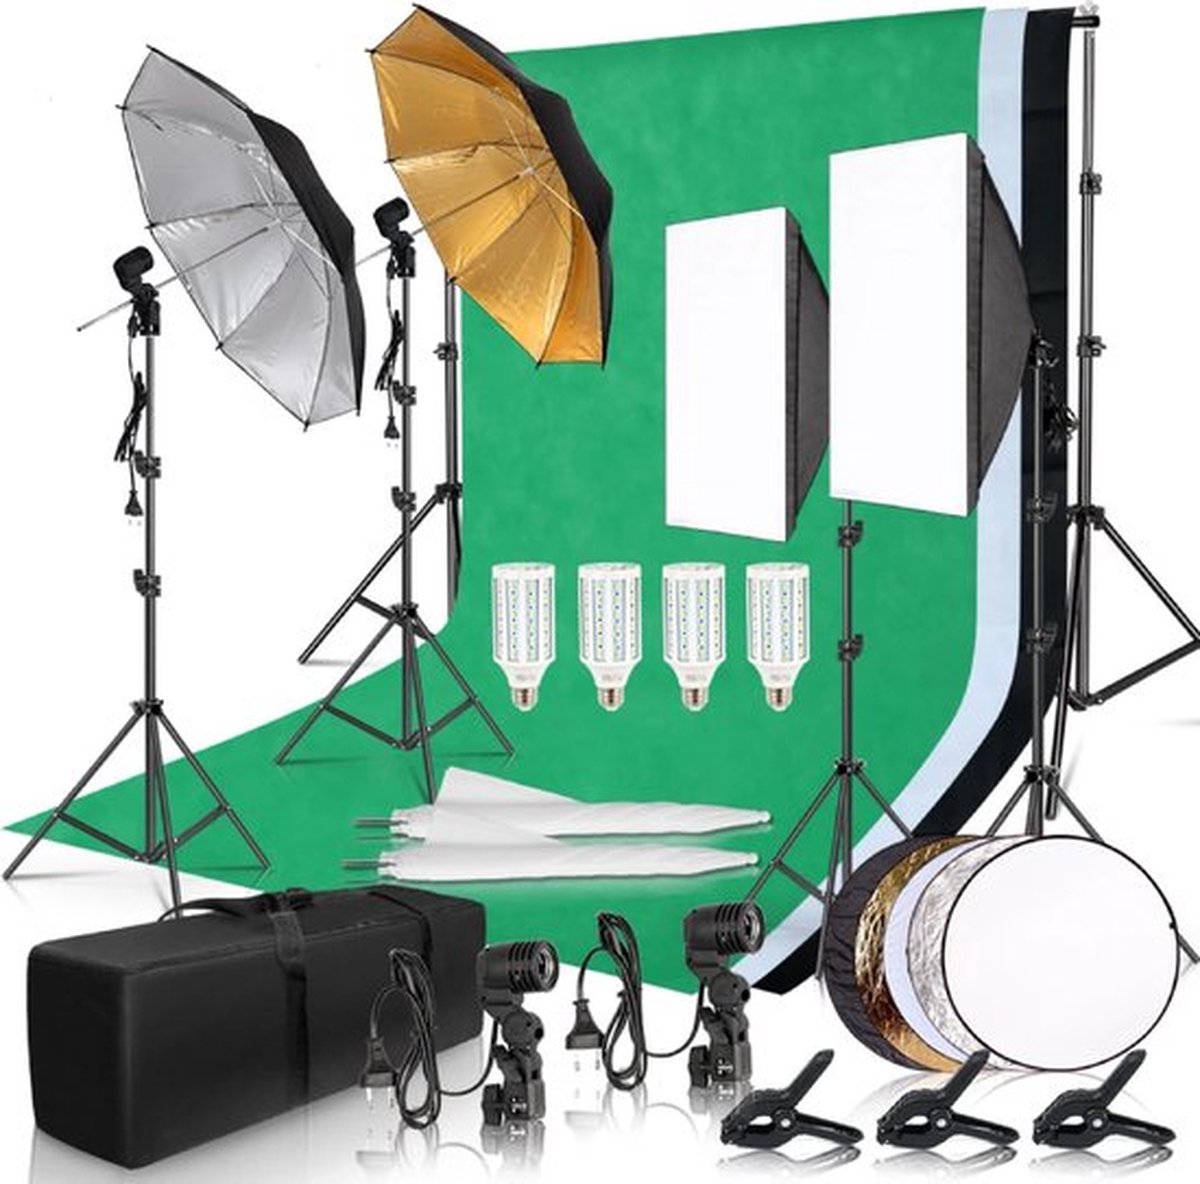 Dripio Fotostudio Set - Fotostudio met Softboxen - Achtergrond Systeem en Greenscreen - Reflector - Paraplu - Professionele Fotostudio - Draagbare Fotostudio - Productfotografie - Portret fotografie - Youtubers - Influencers